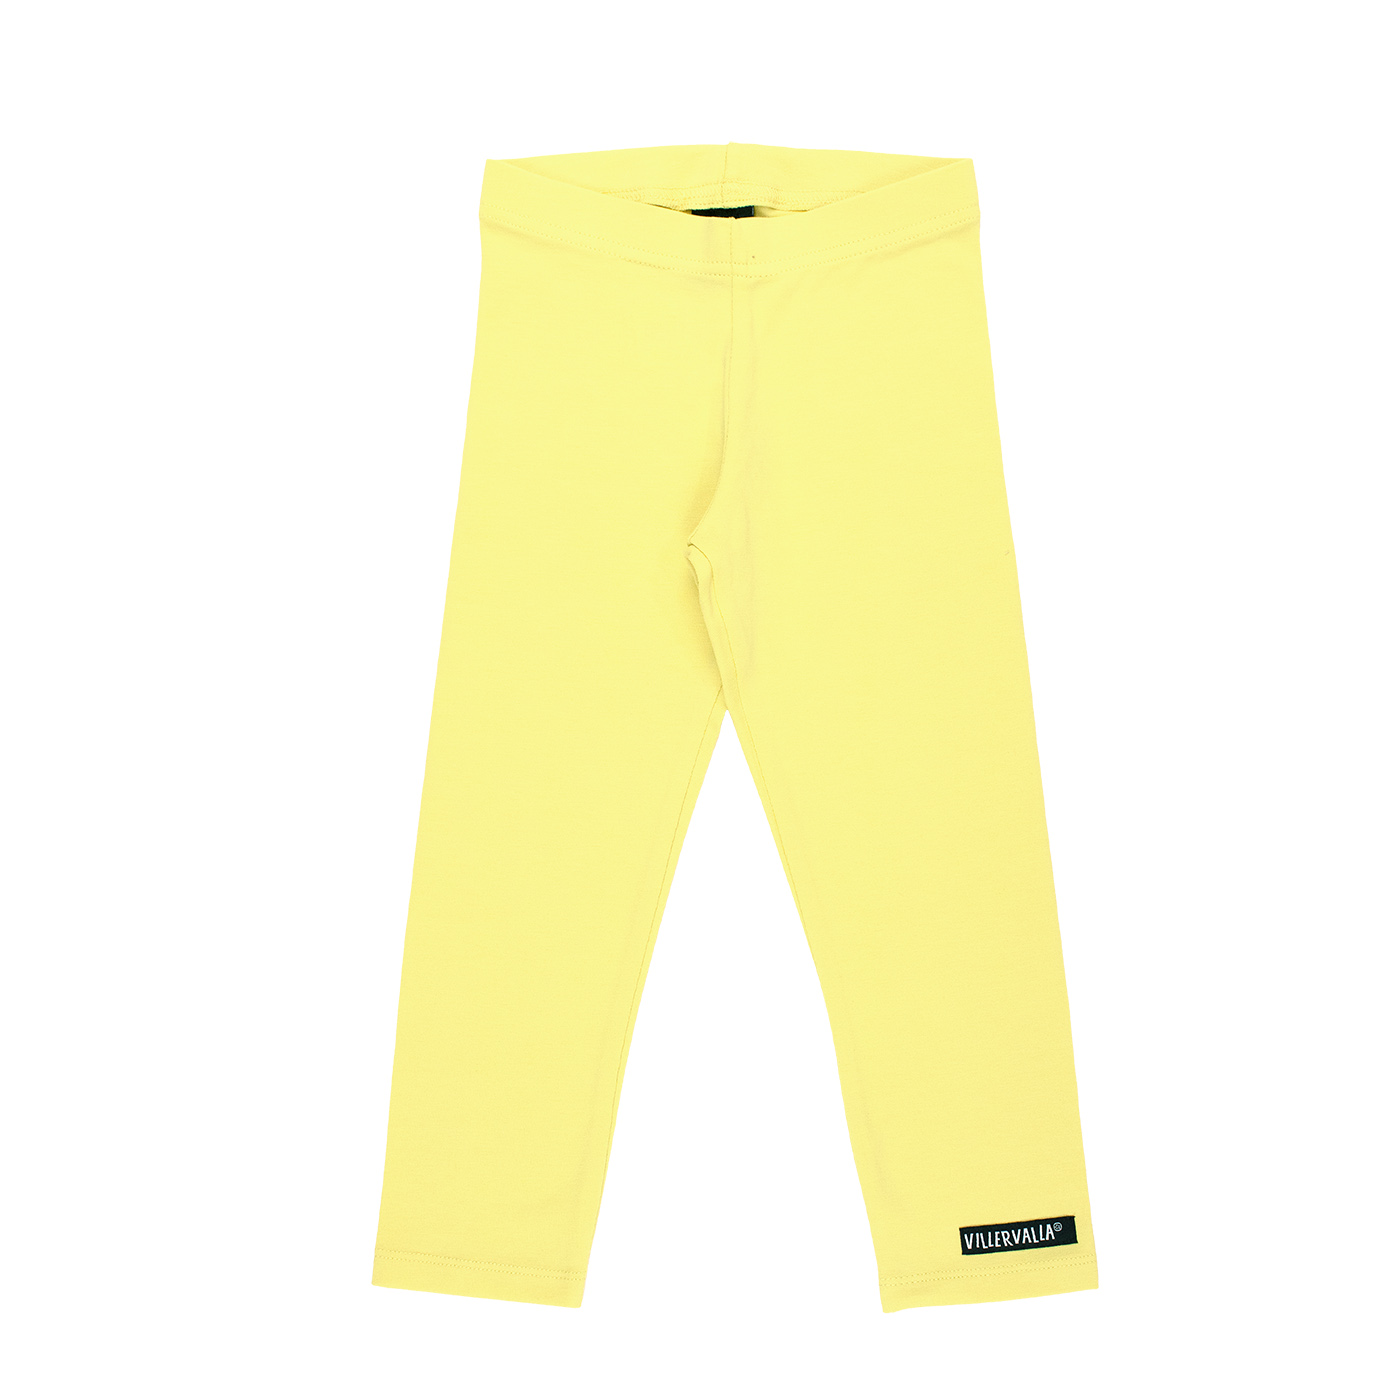 Marmalade Lucy Pink & Yellow Lemon Print Leggings Yoga Pants - Women